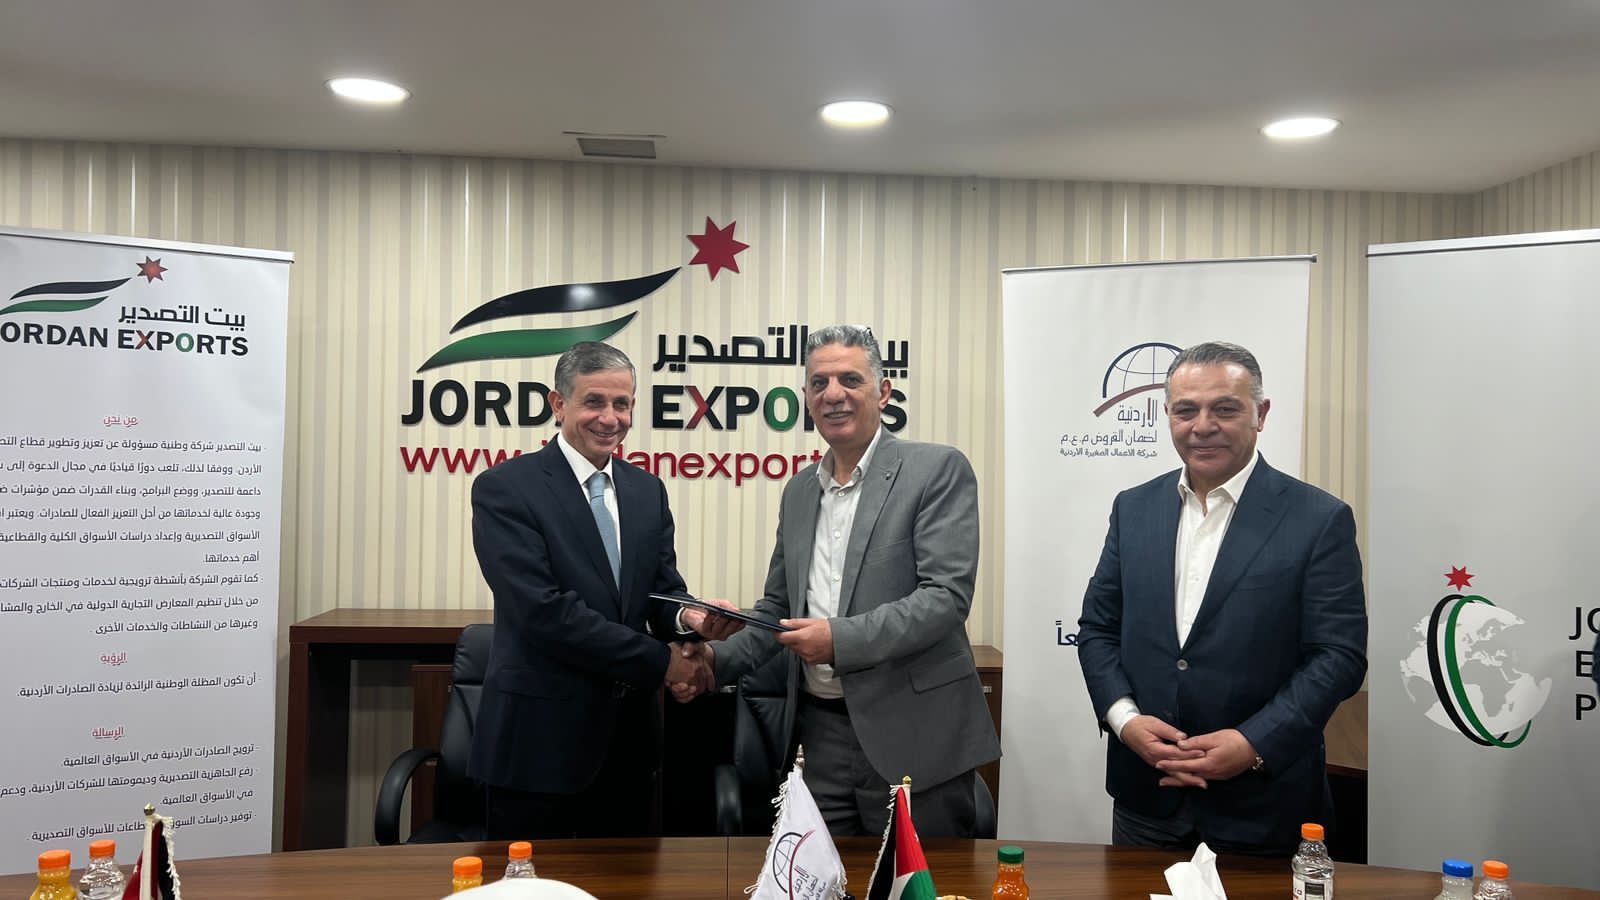 JLGC and Jordan Exports sign a memorandum of understanding to support national exports